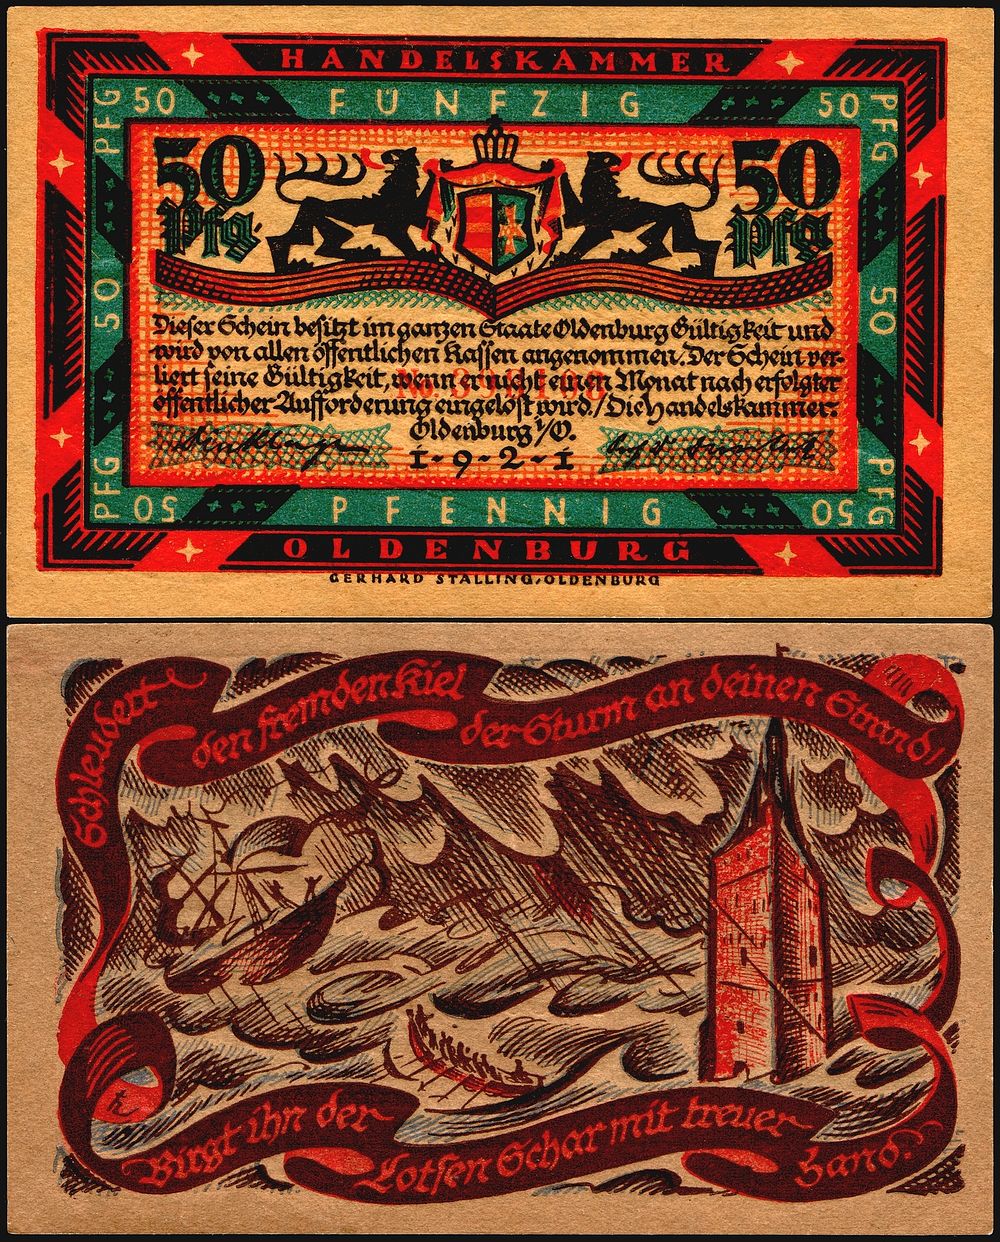 50 Pfennig "Notgeld" banknote of Oldenburg (city) (1921), RV: stormy seascape, size: 72 mm x 115 mm.